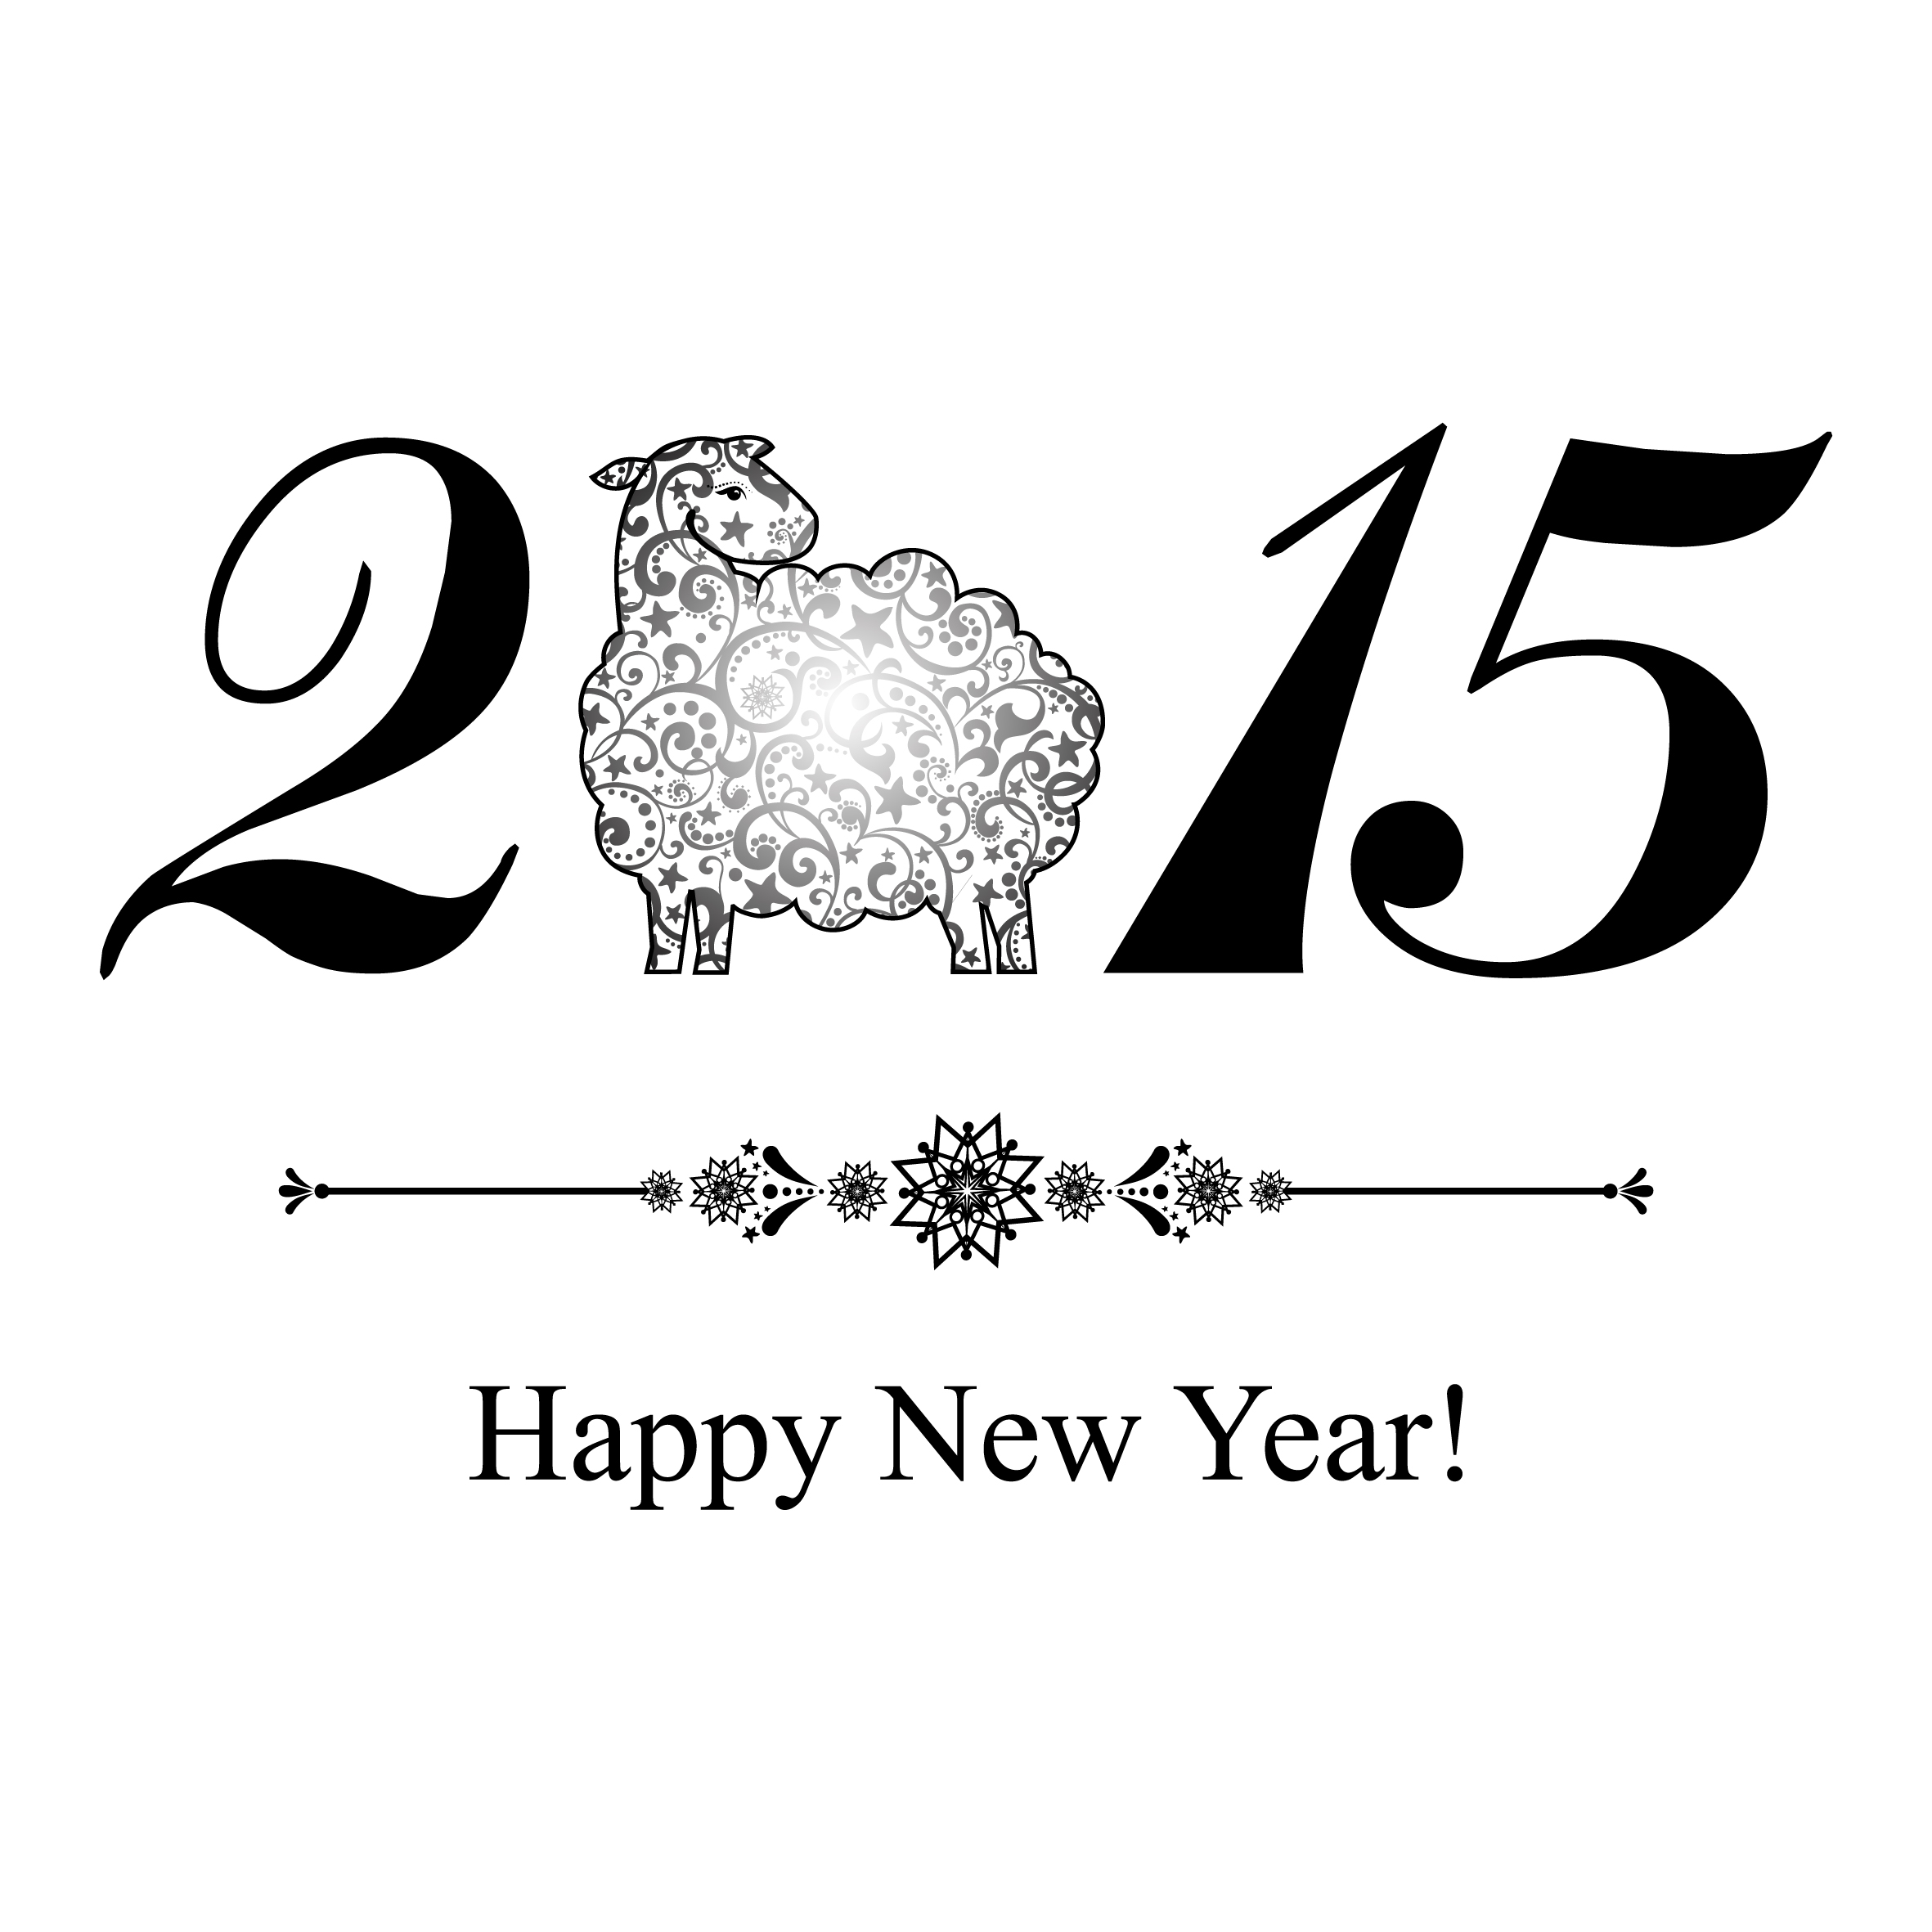 year sheep creative background 2015 